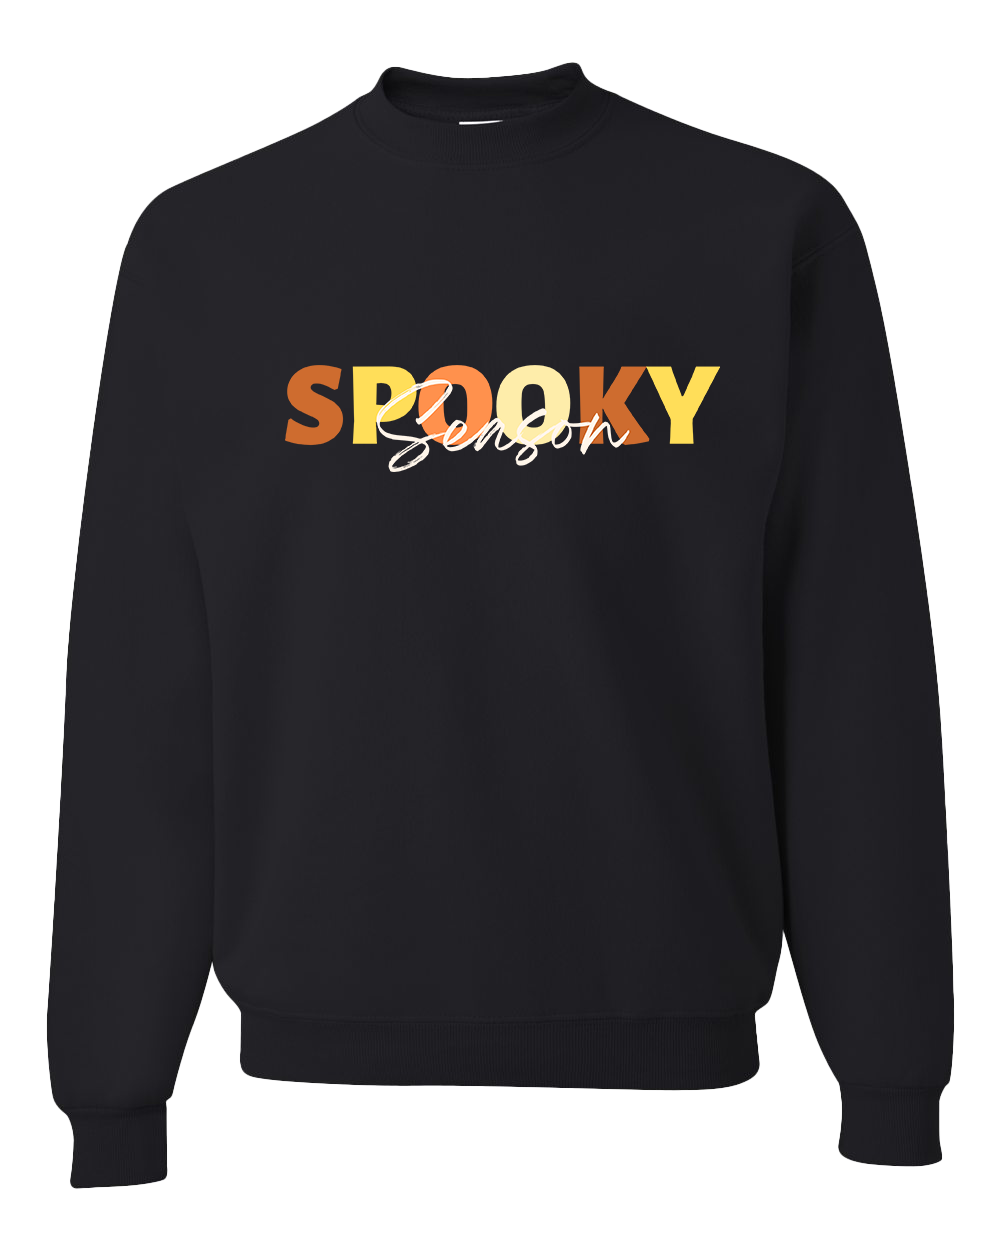 Spooky Season Crew Sweatshirt - Black